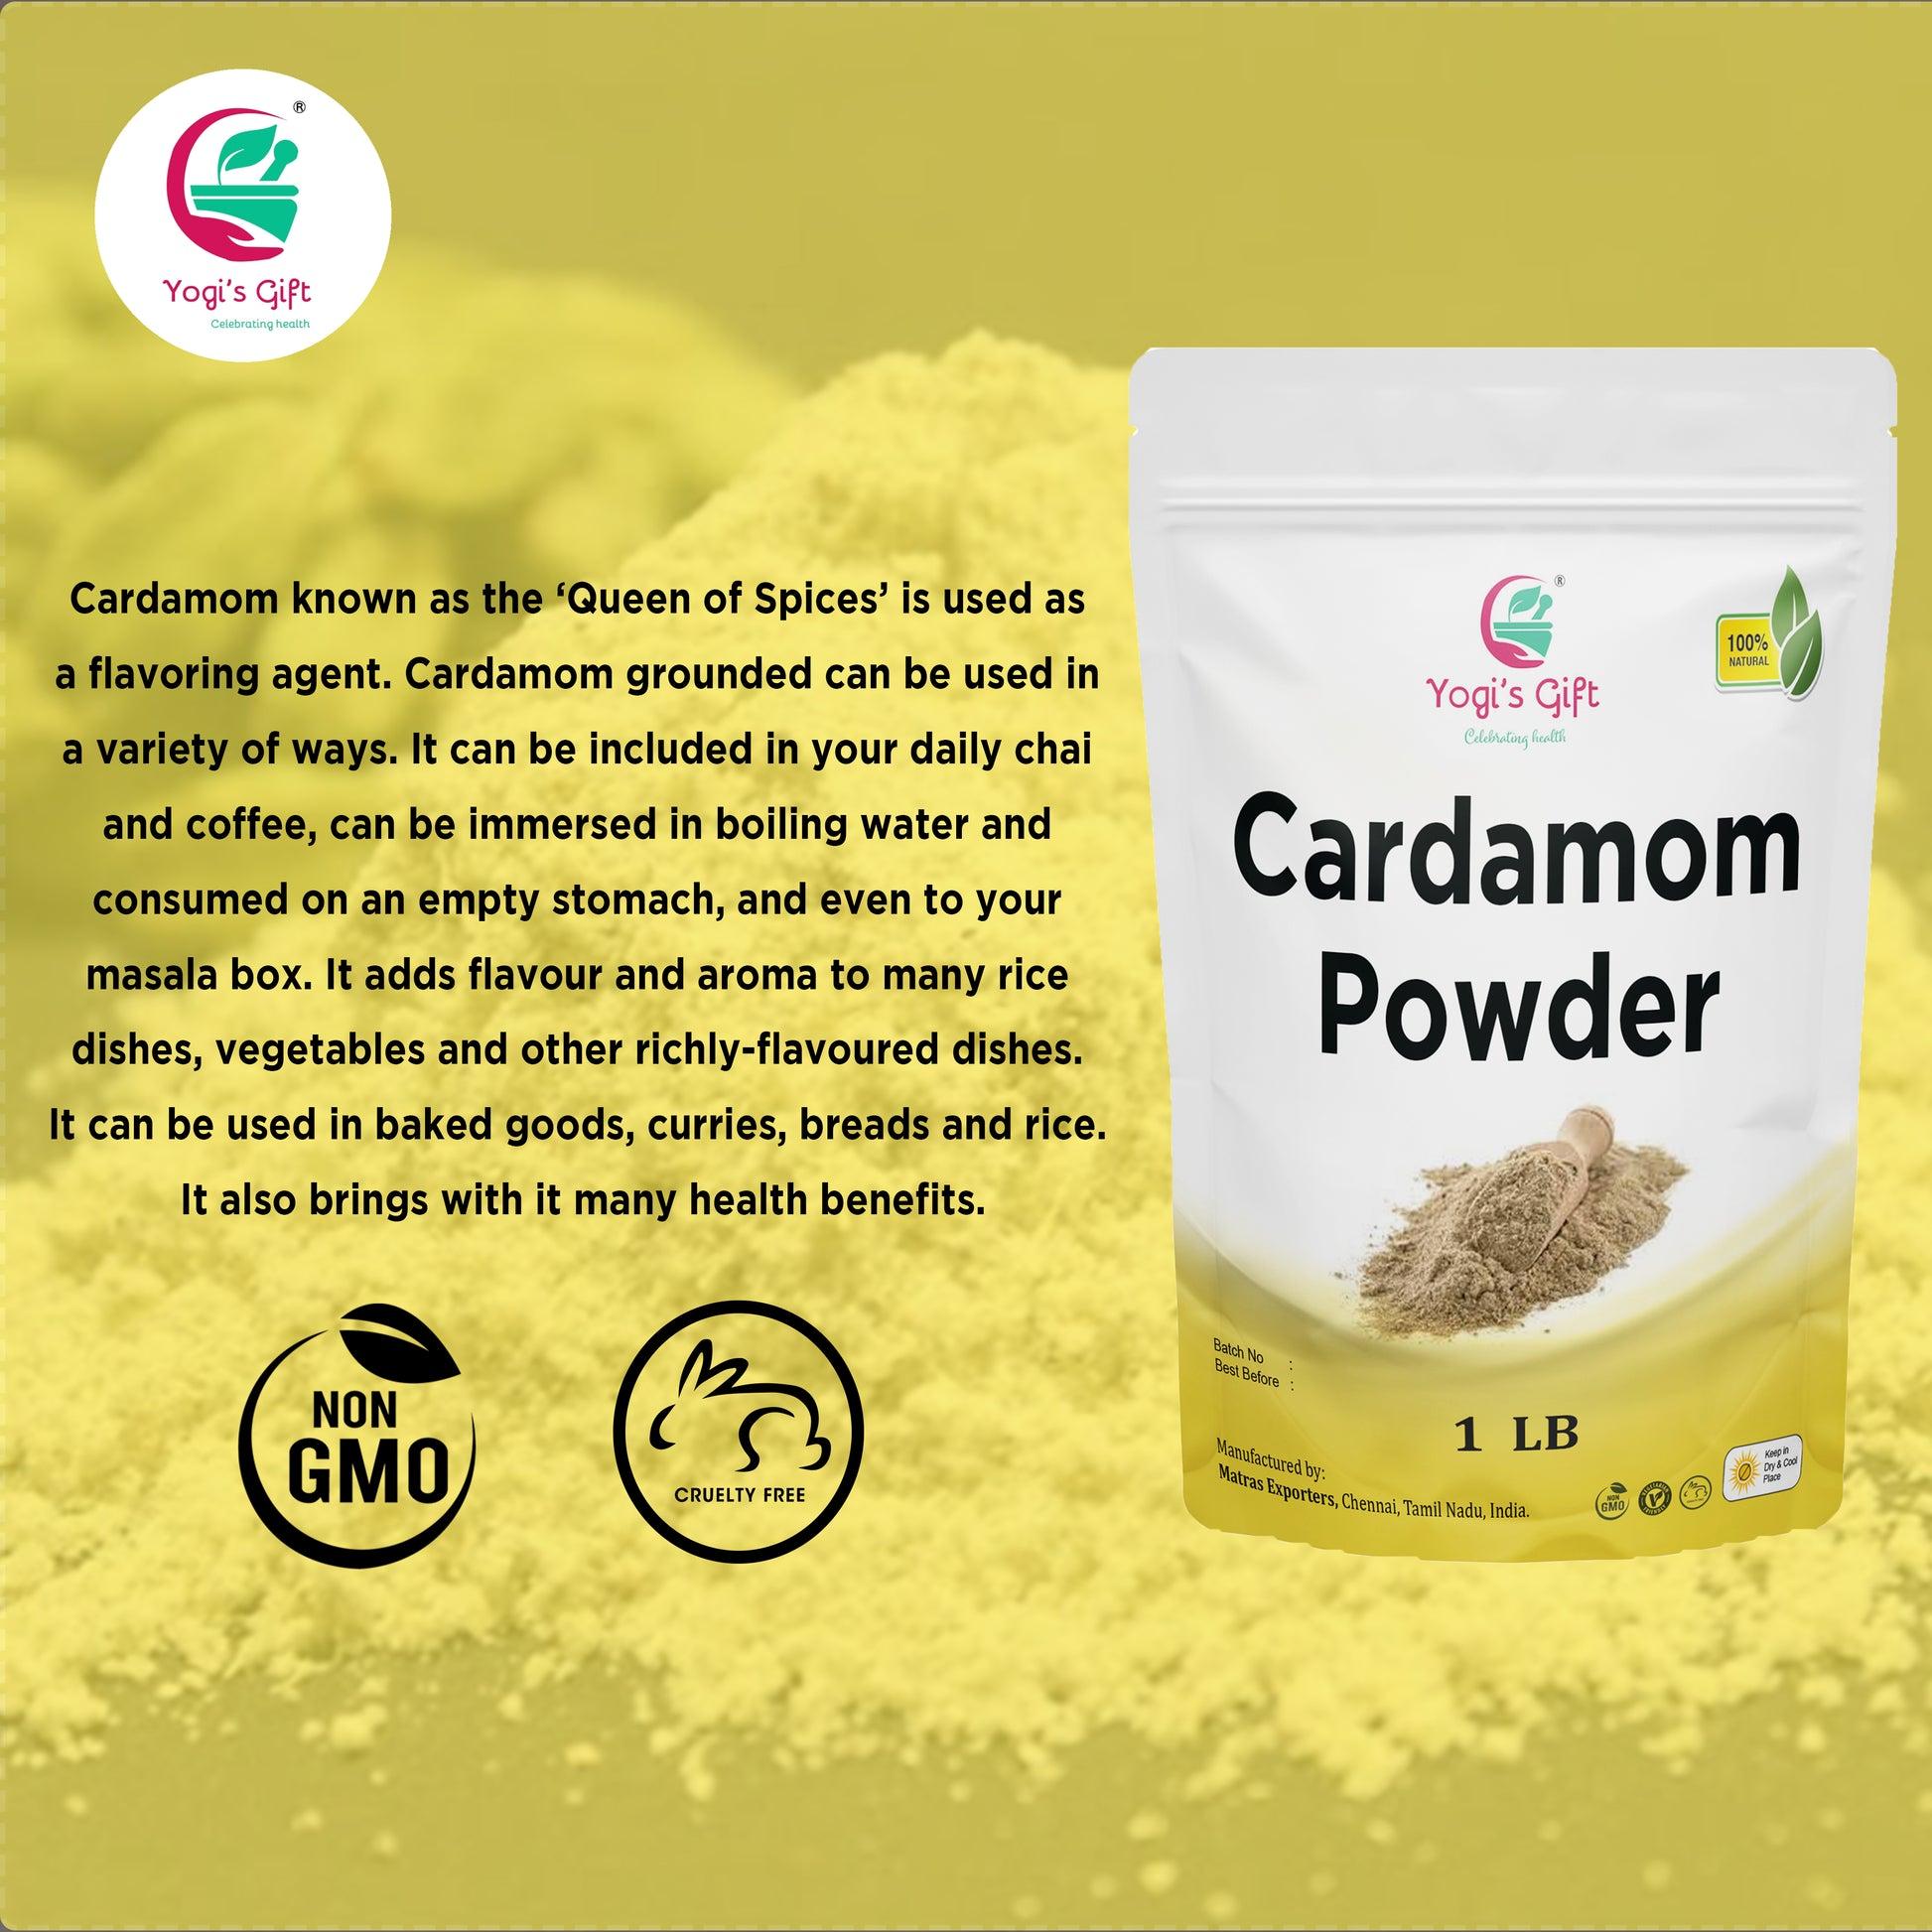 About Cardamom Powder